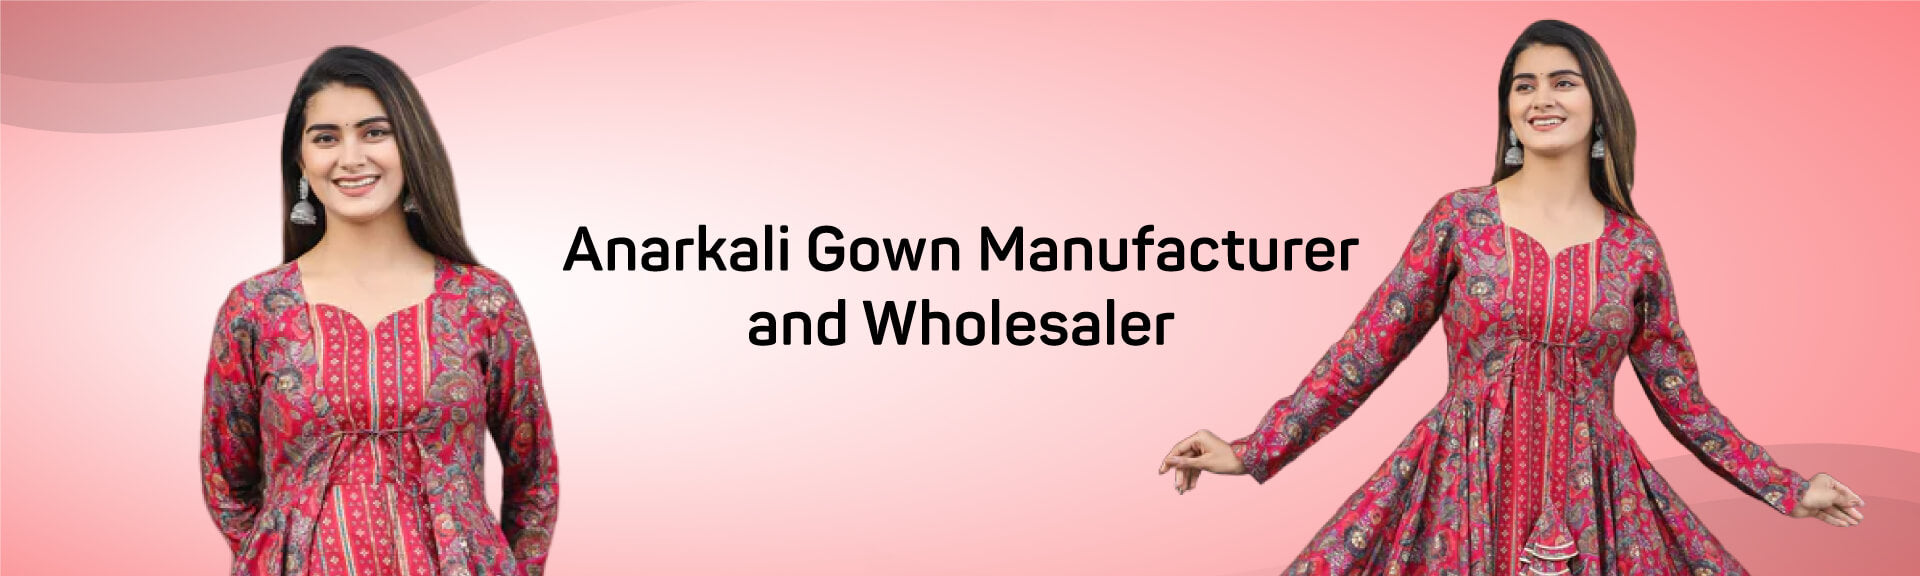 Anarkali Gowns Manufacturer and Wholesaler in Surat